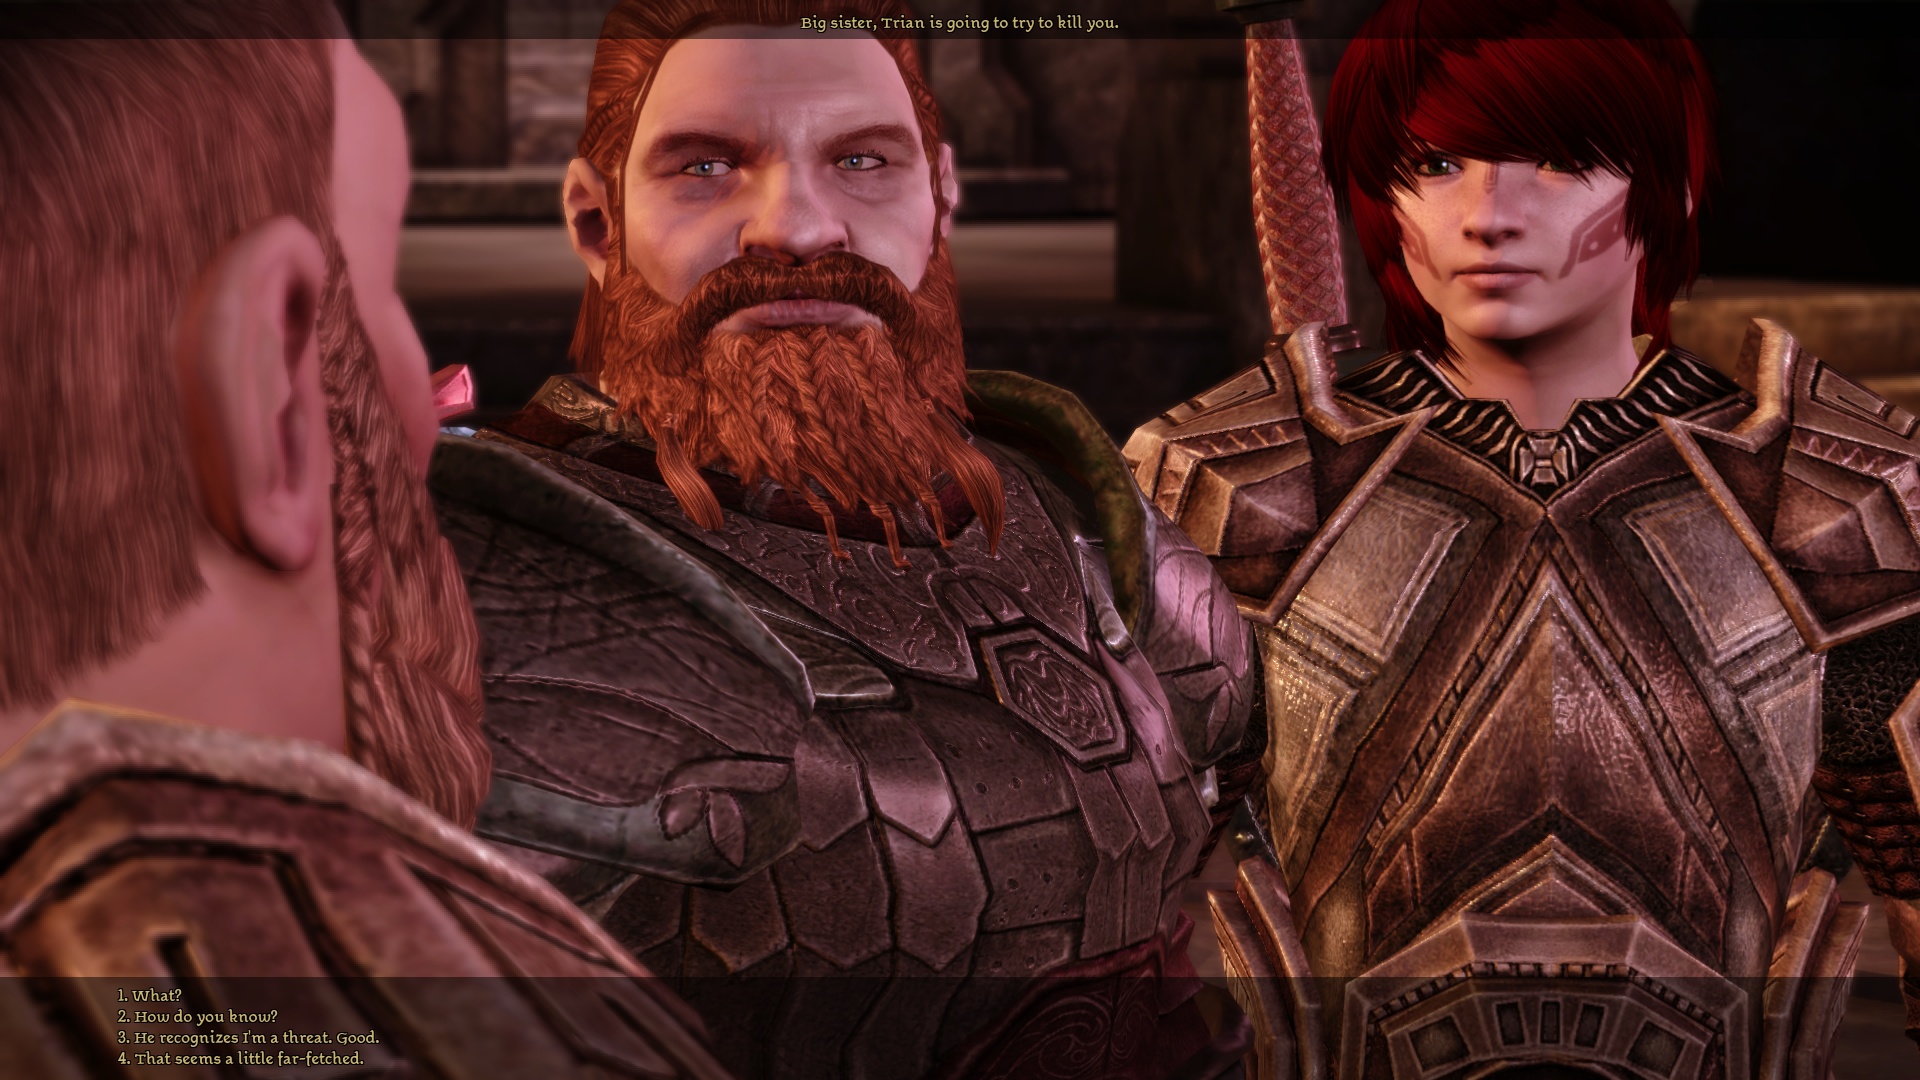 Dwarf Noble Story Is The Best Dragon Age Origin So Far (PC)